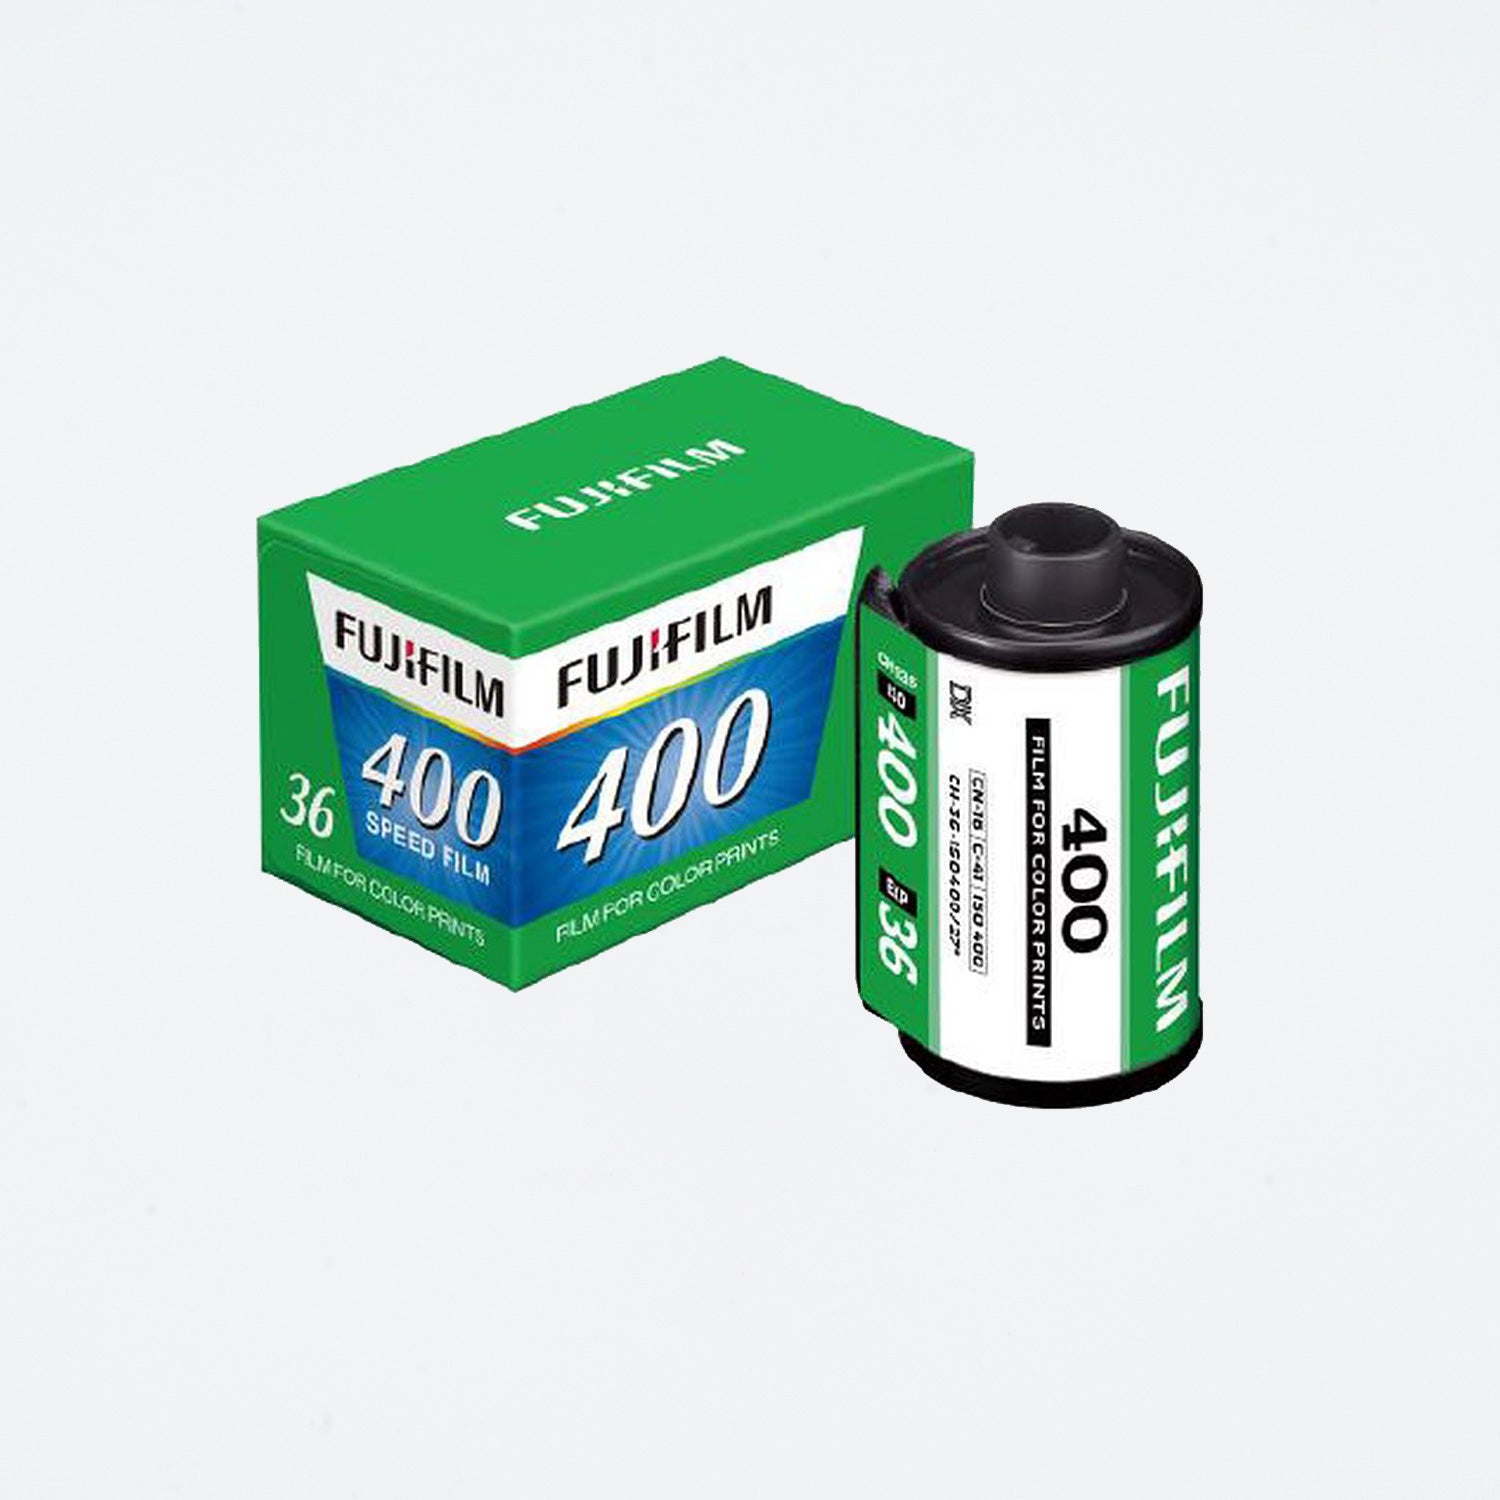 Fujifilm 400 color negative film 135-36 (35mm)